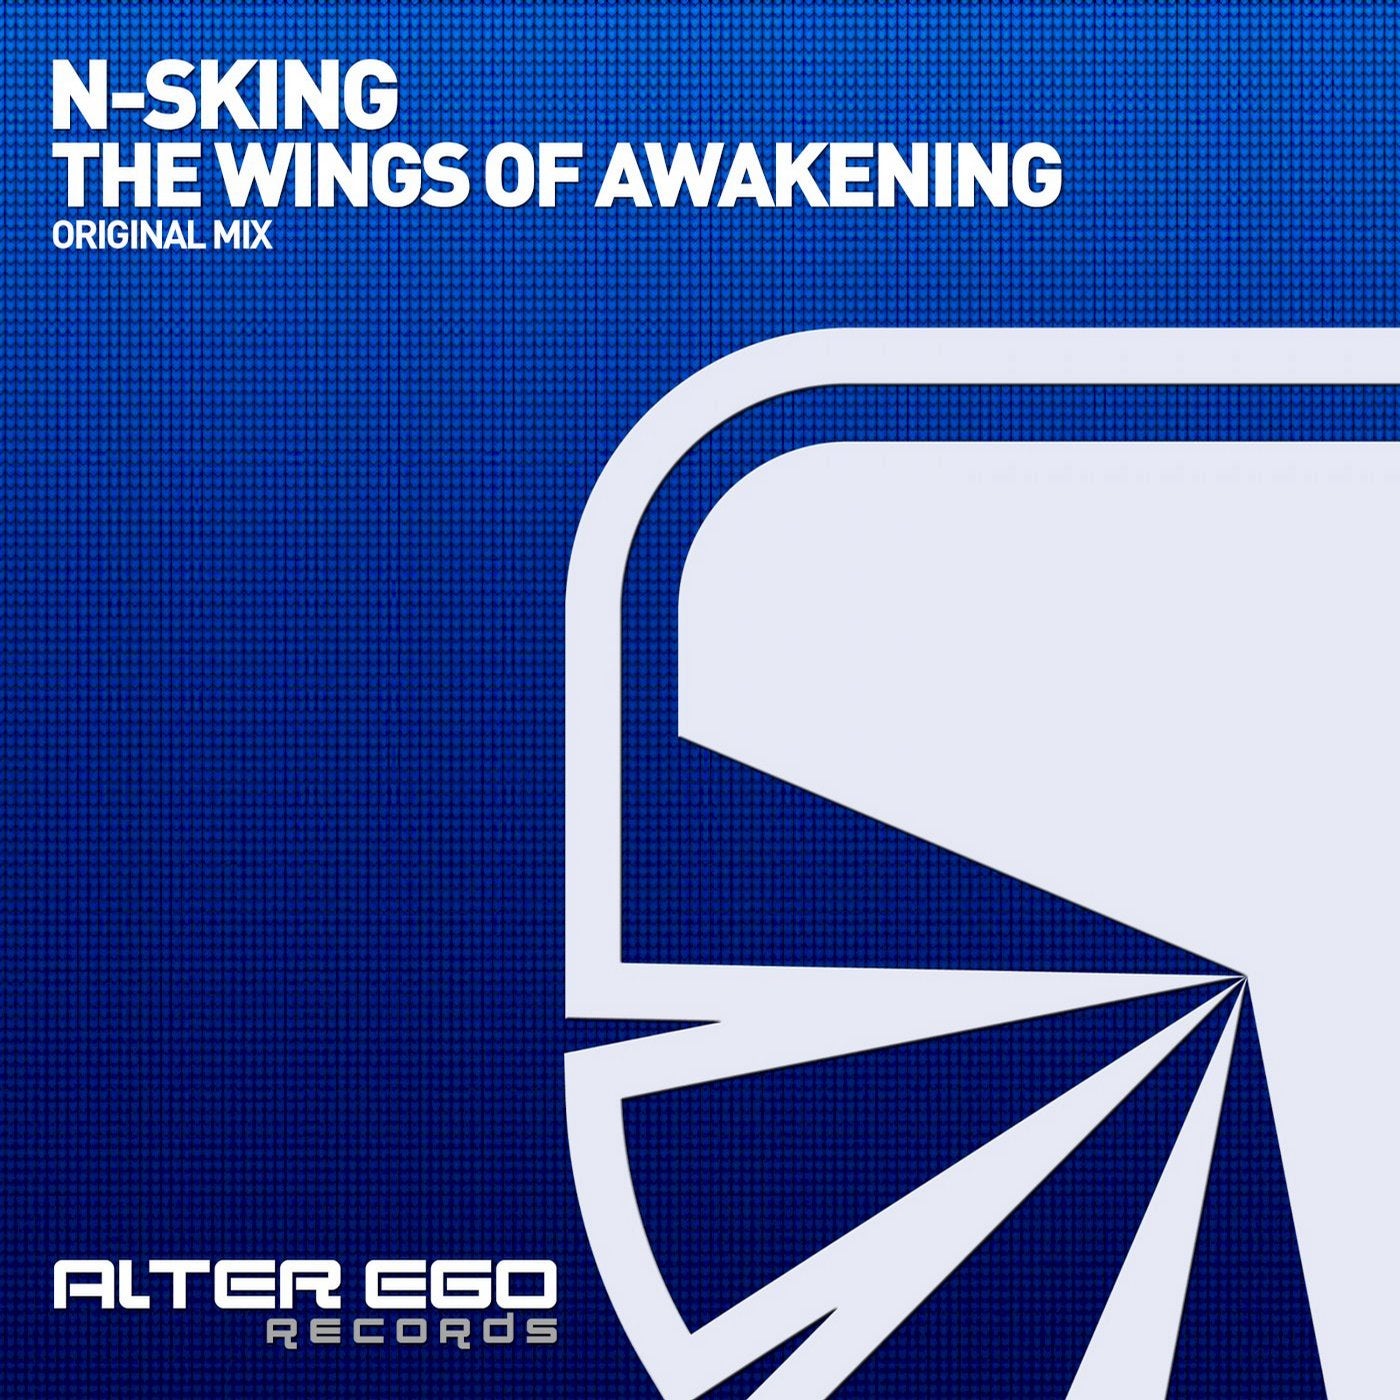 The Wings of Awakening